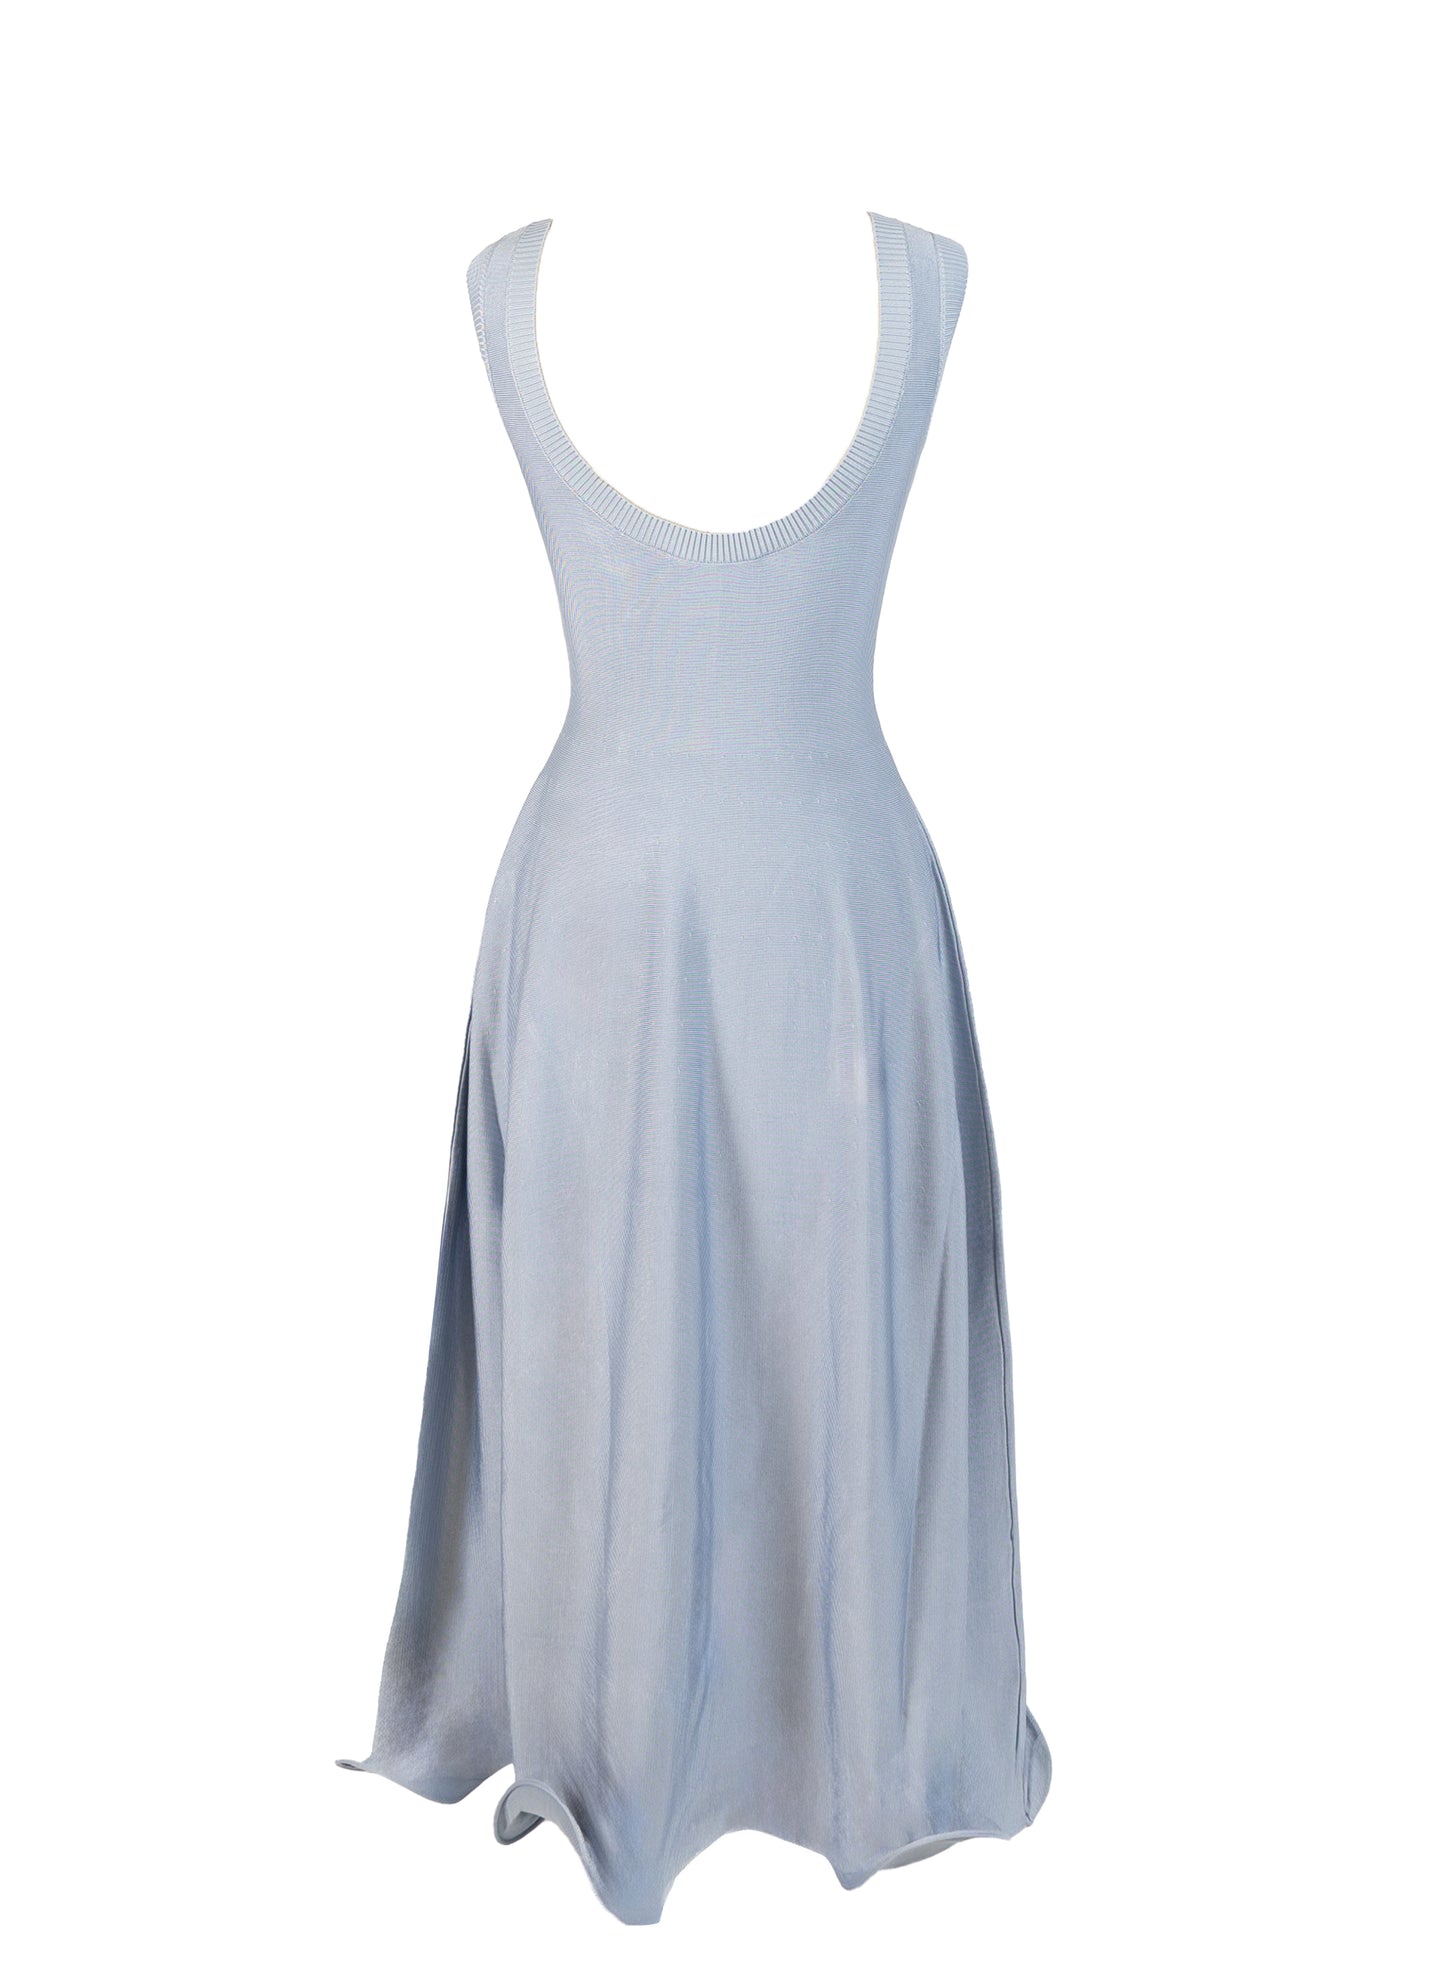 Wavy Skirt Knit Sleeveless Dress Blue